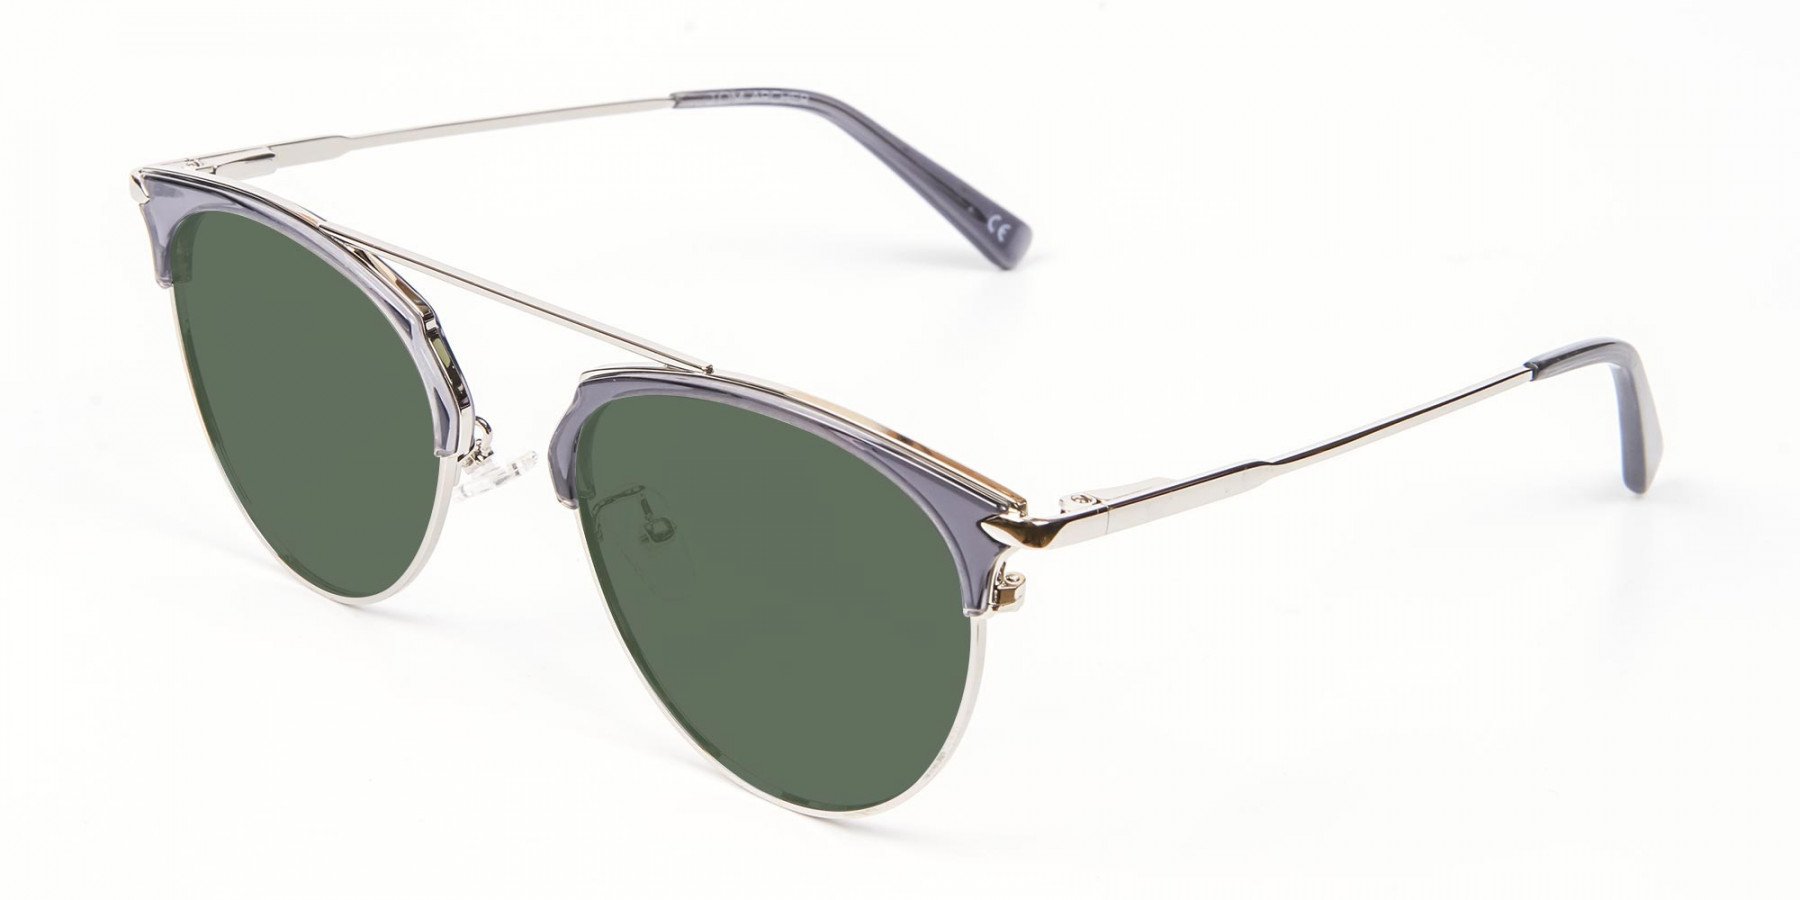 Translucent Frame Sunglasses - 3